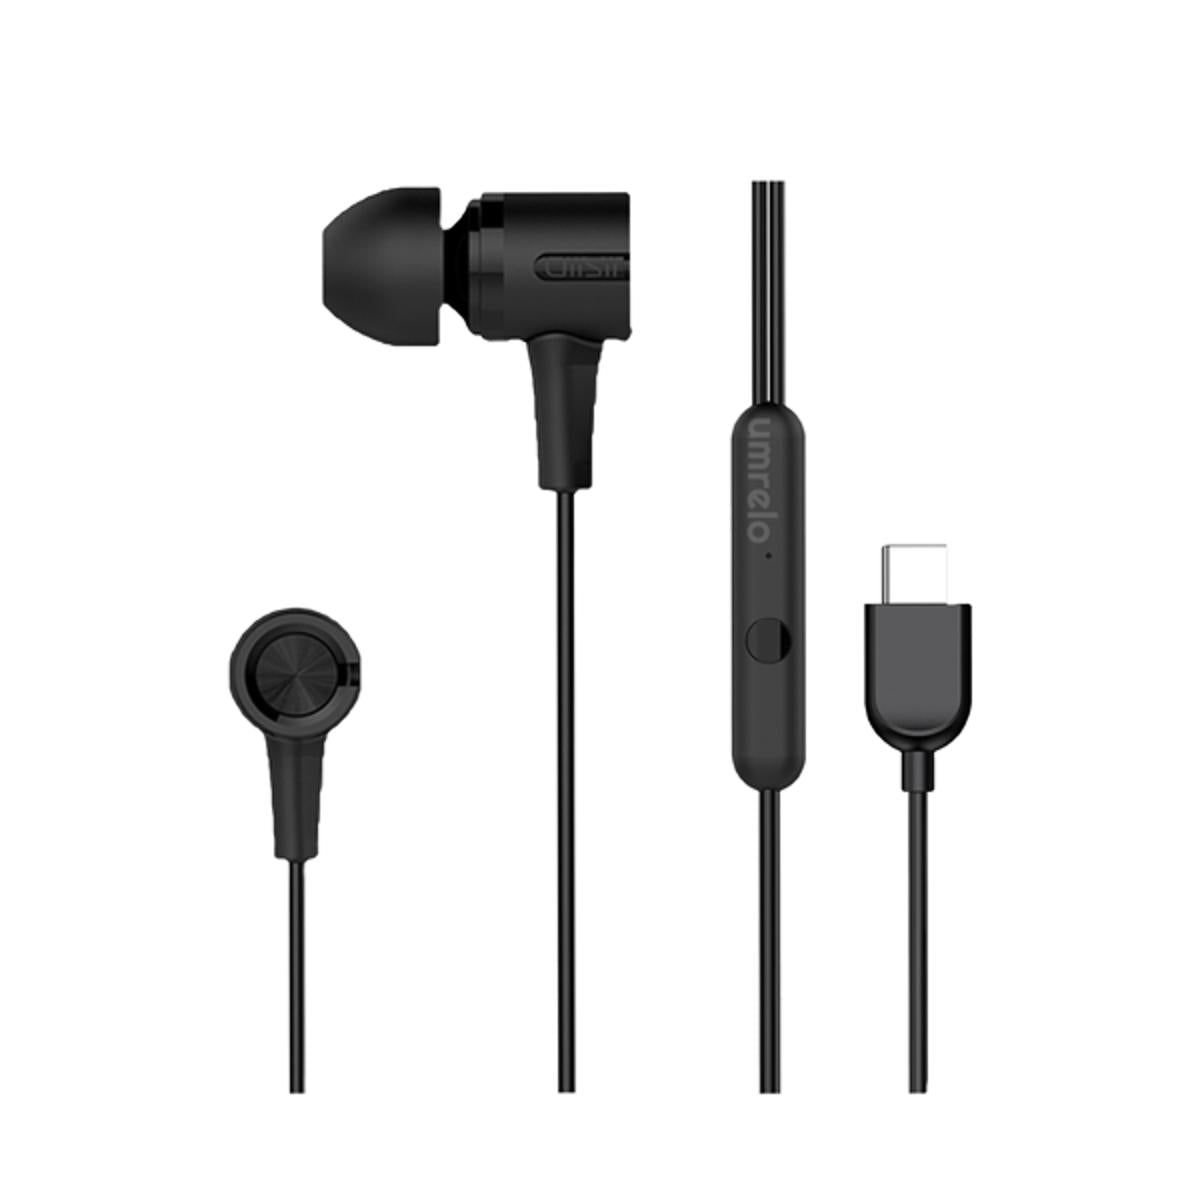 UiiSii U7C Wired In-Ear Headphones with Microphone - Type C